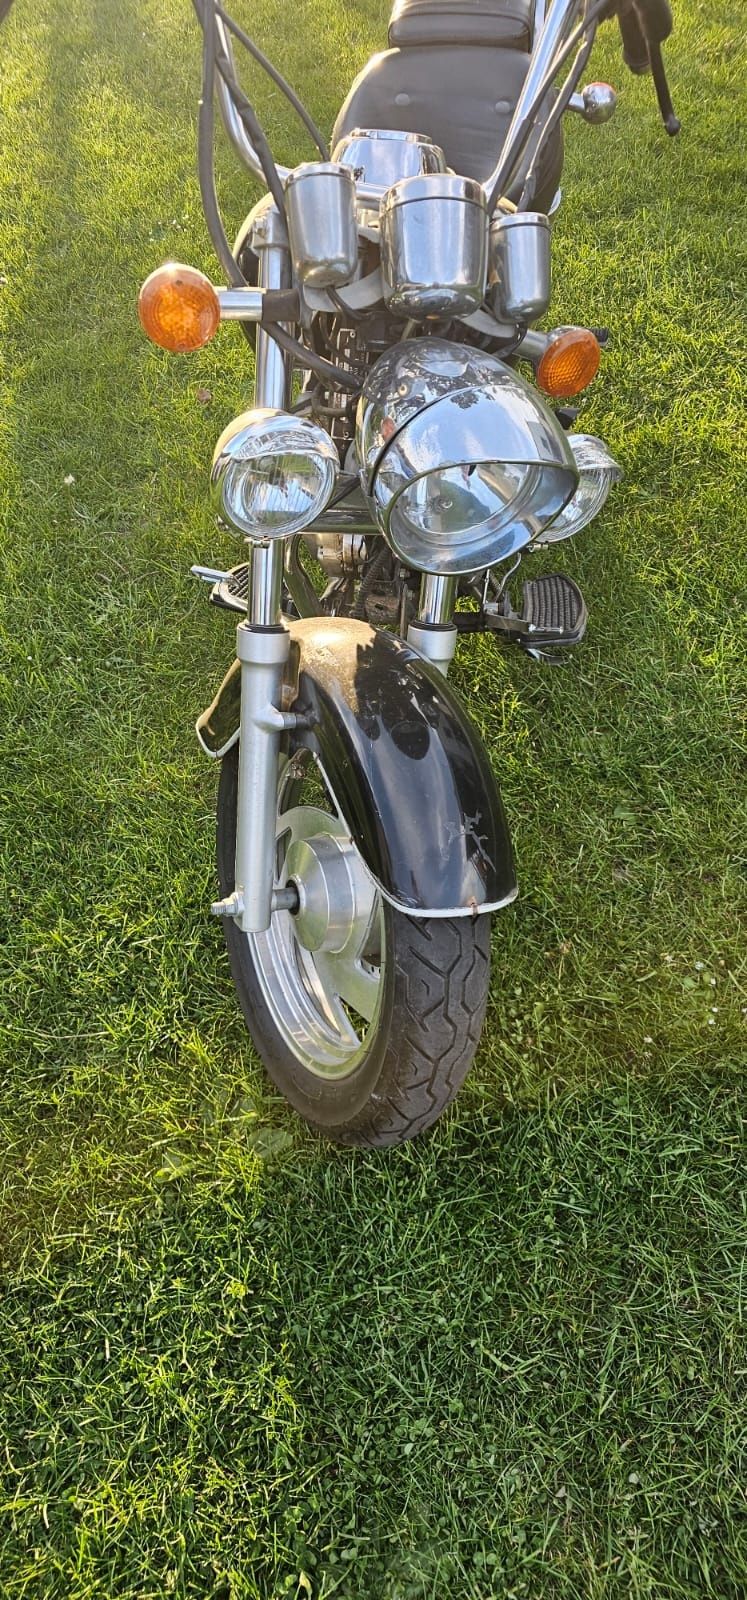 Motocykl Romet 150